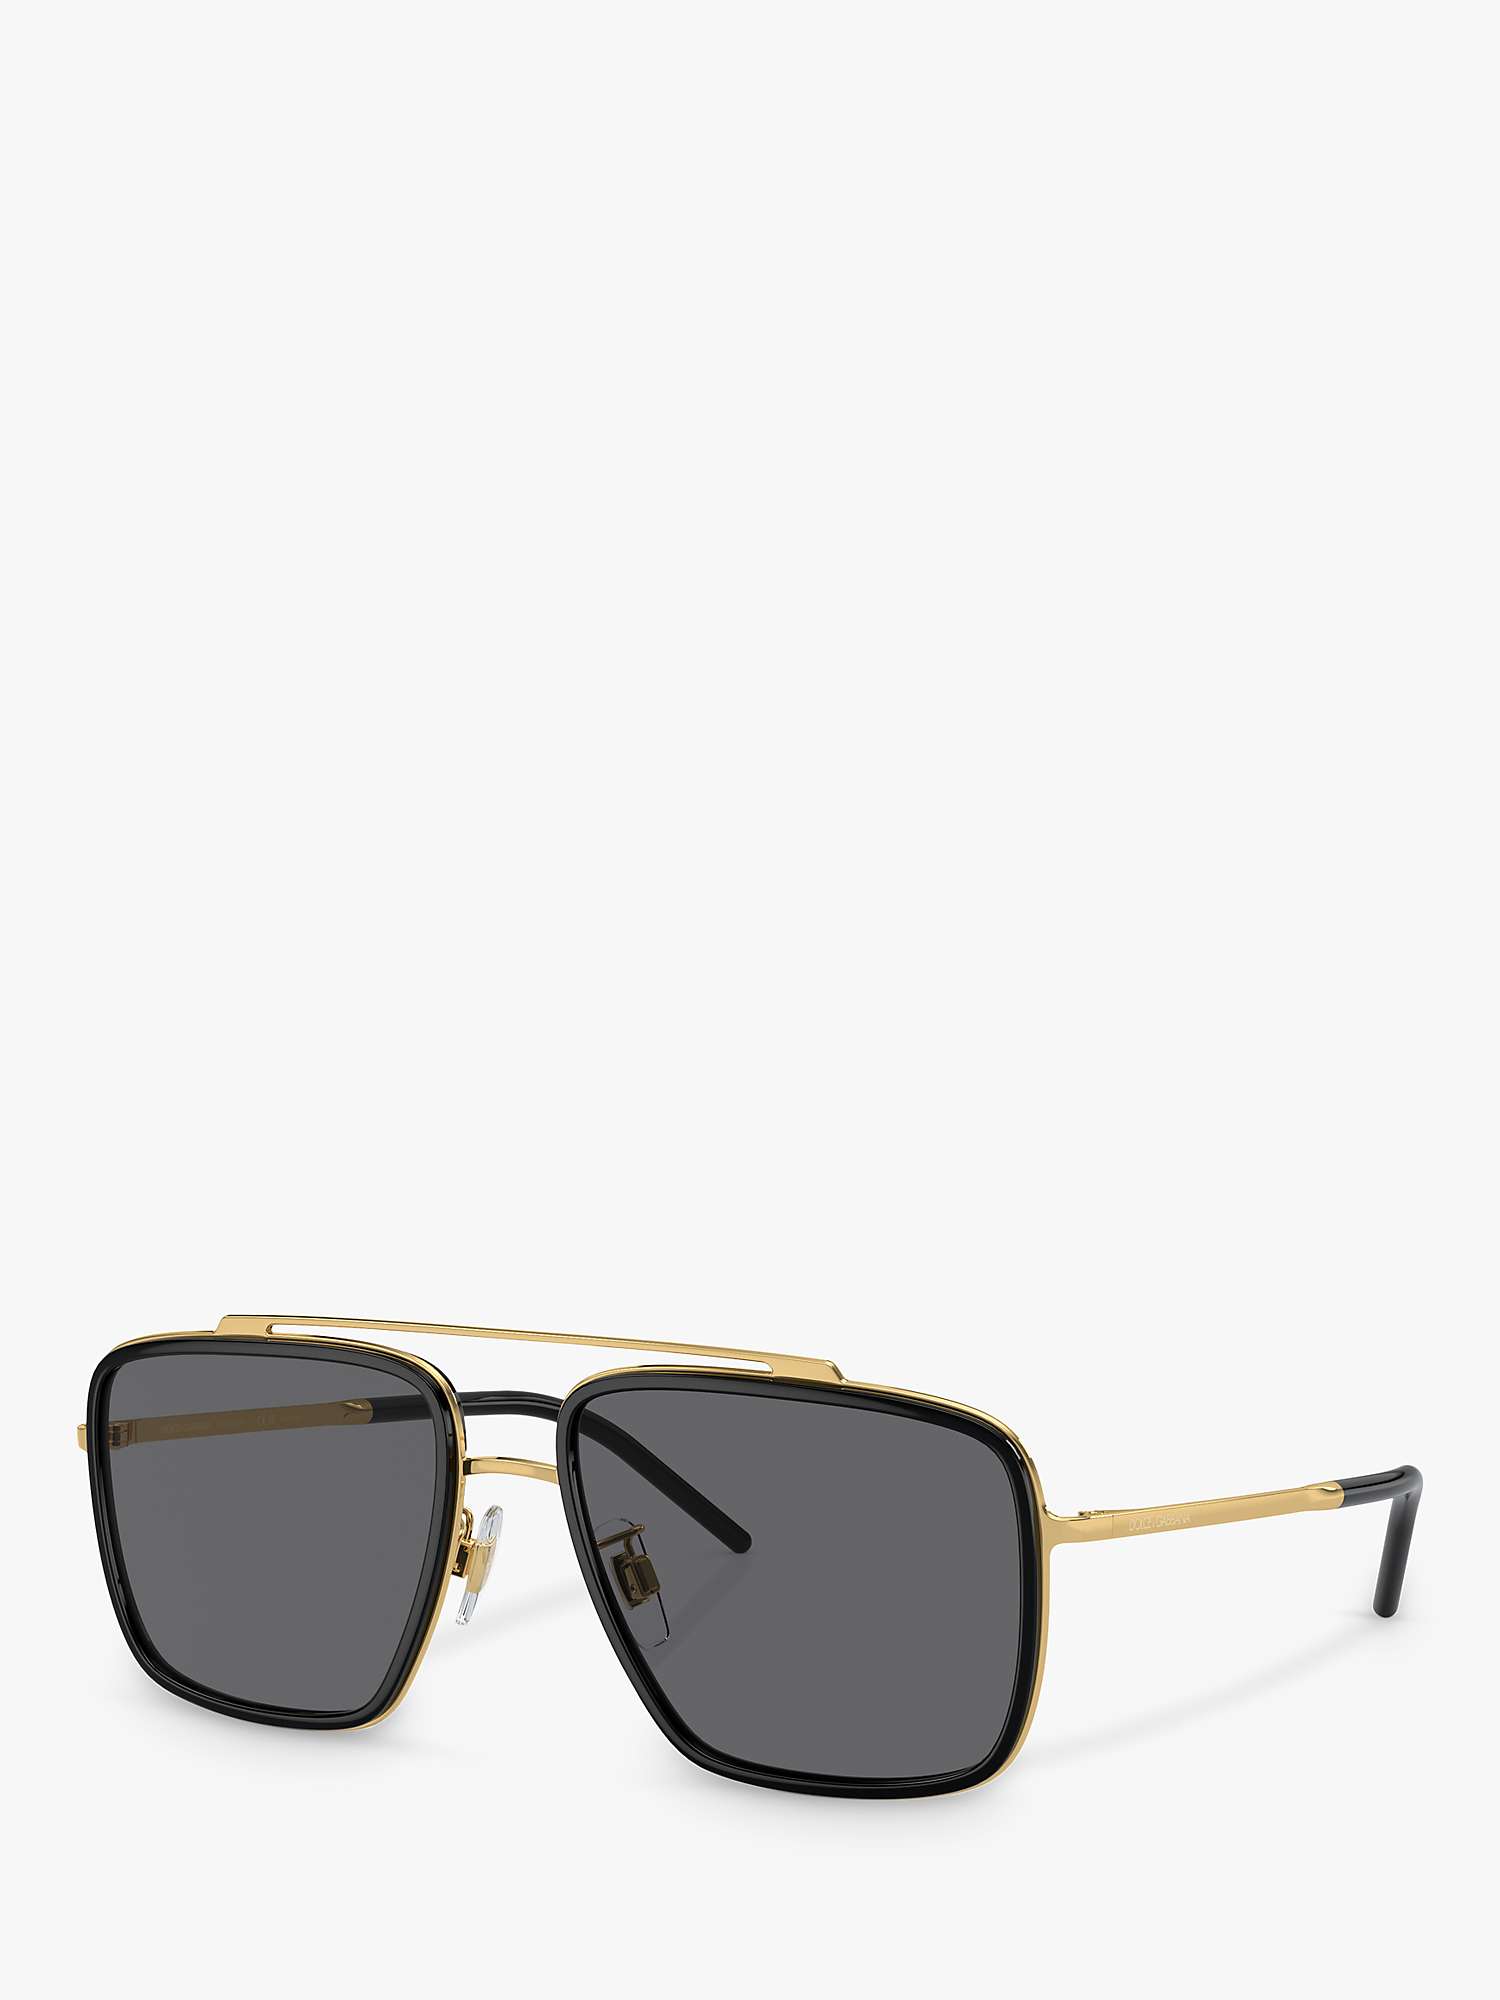 Dolce & Gabbana DG2220 Men's Polarised Square Sunglasses, Gold/Black at ...